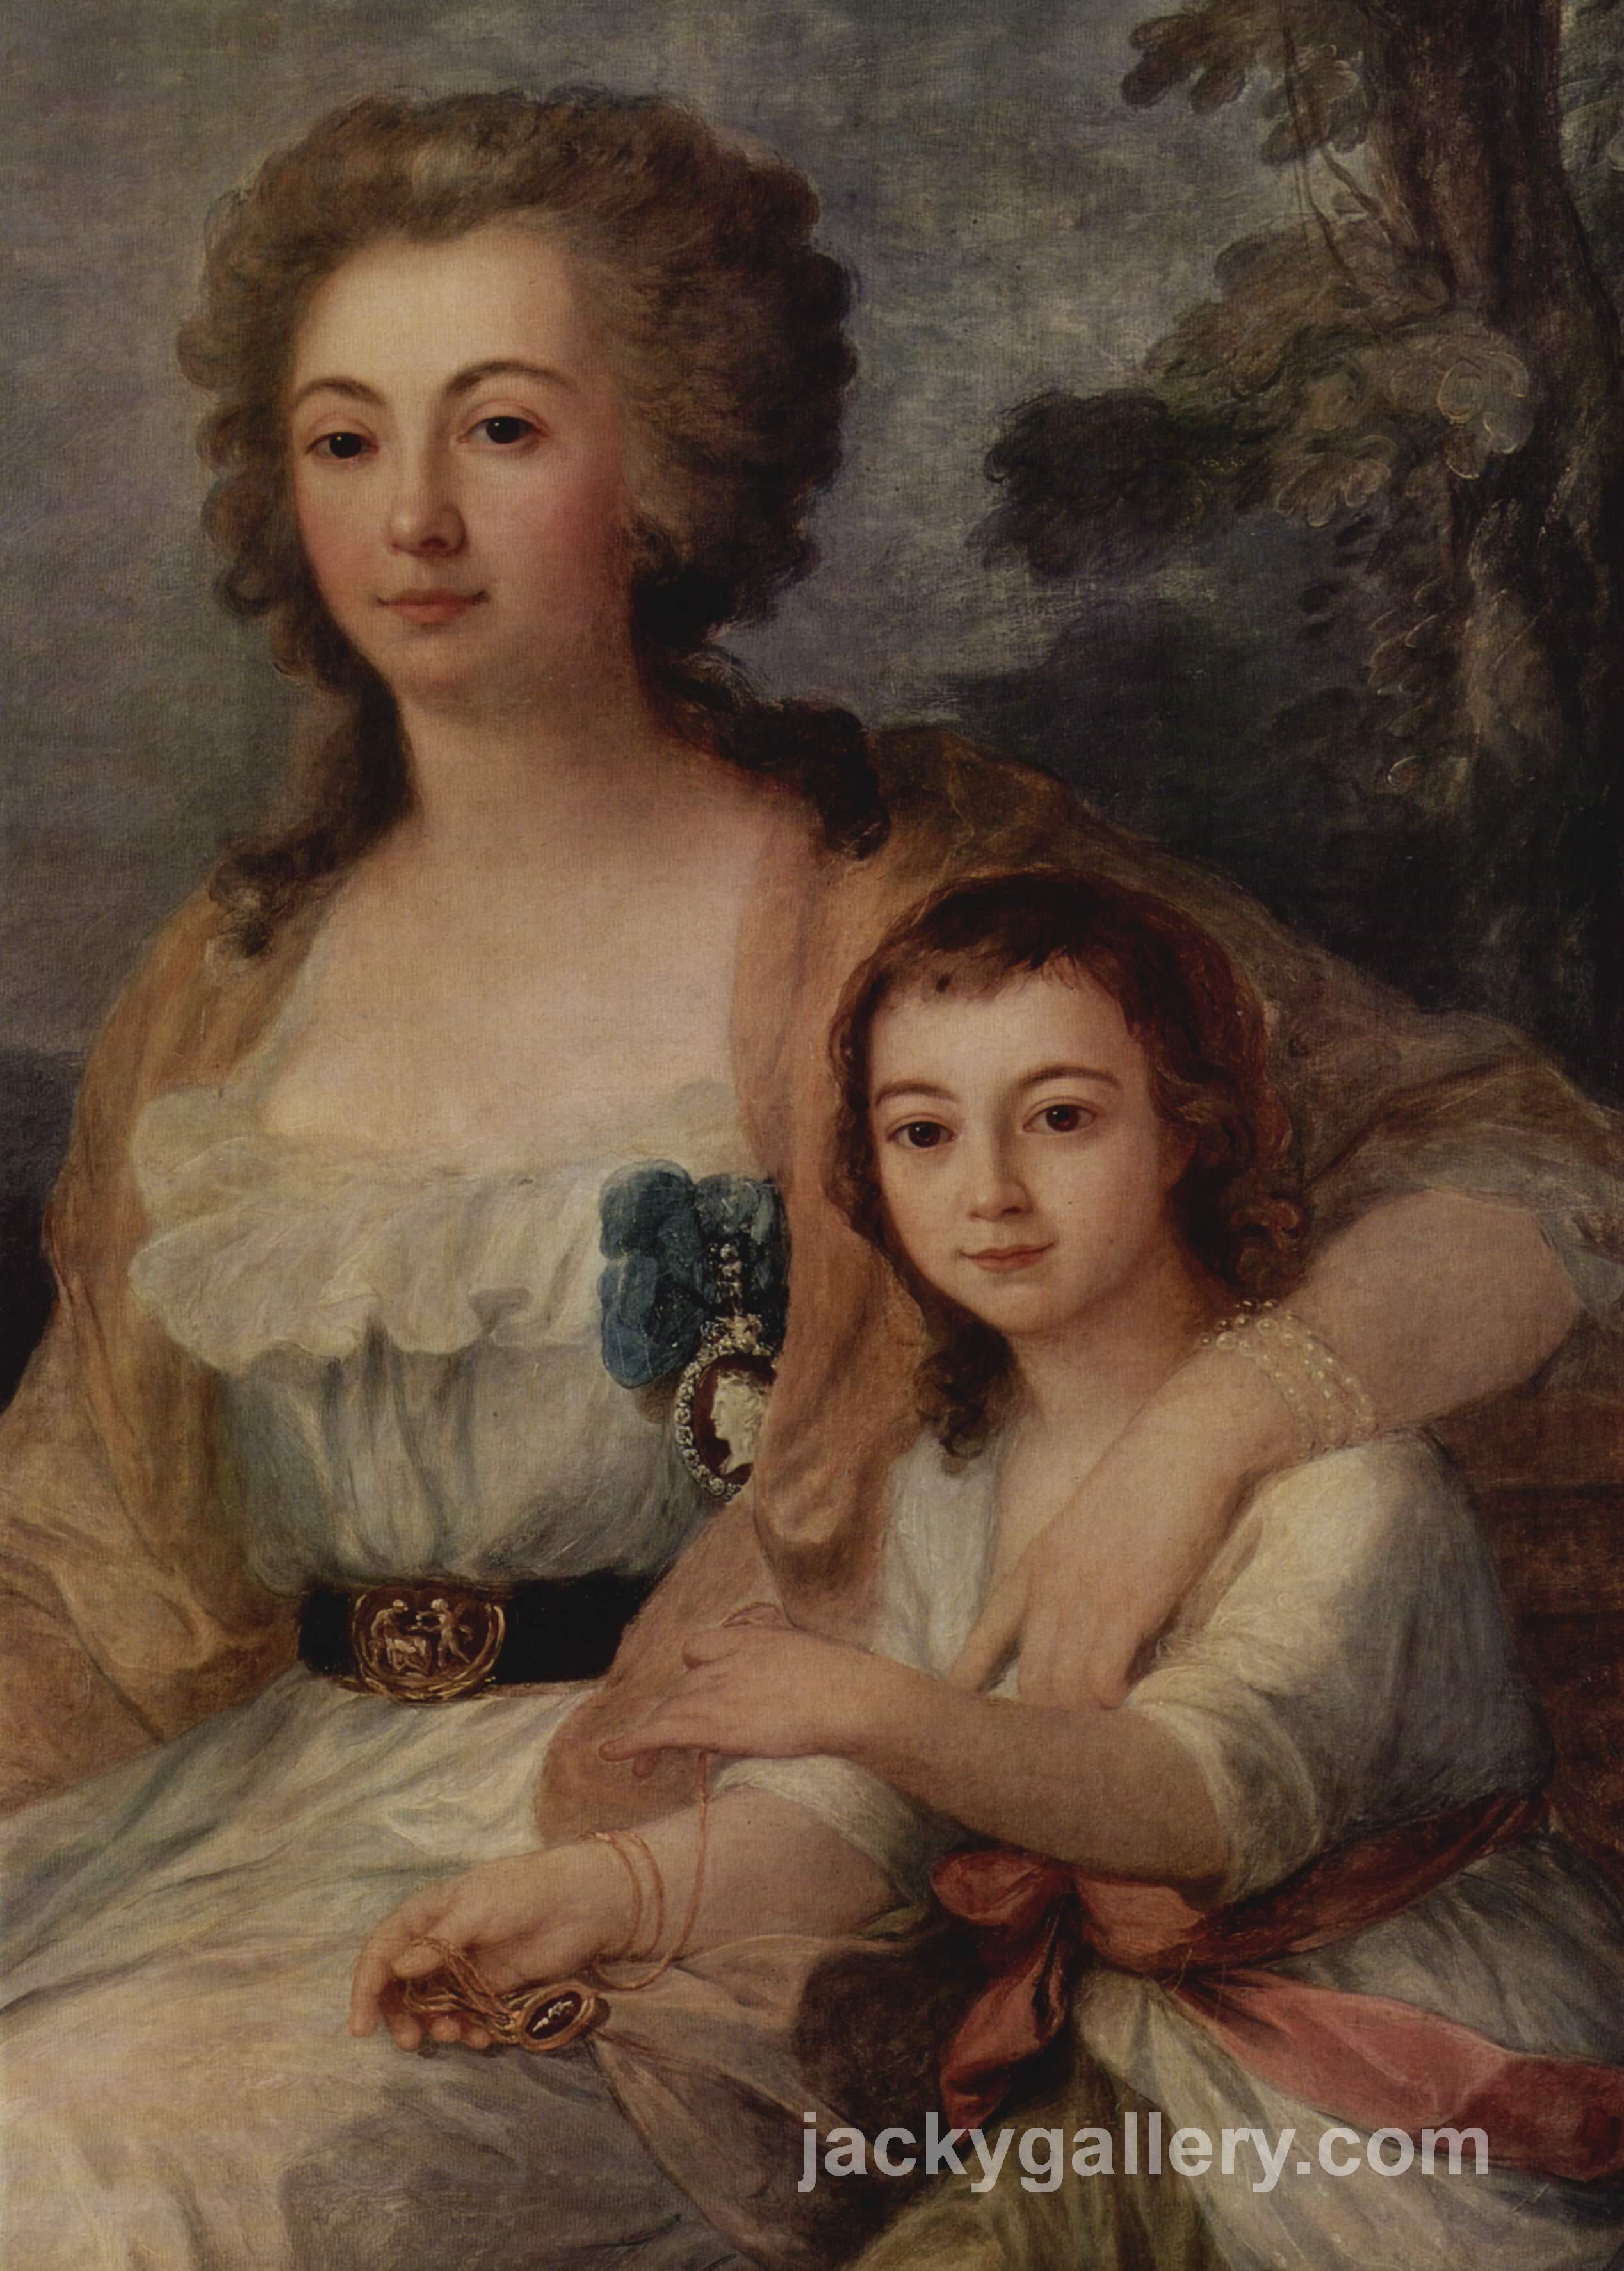 Countess Anna Protassowa with niece, Angelica Kauffman painting